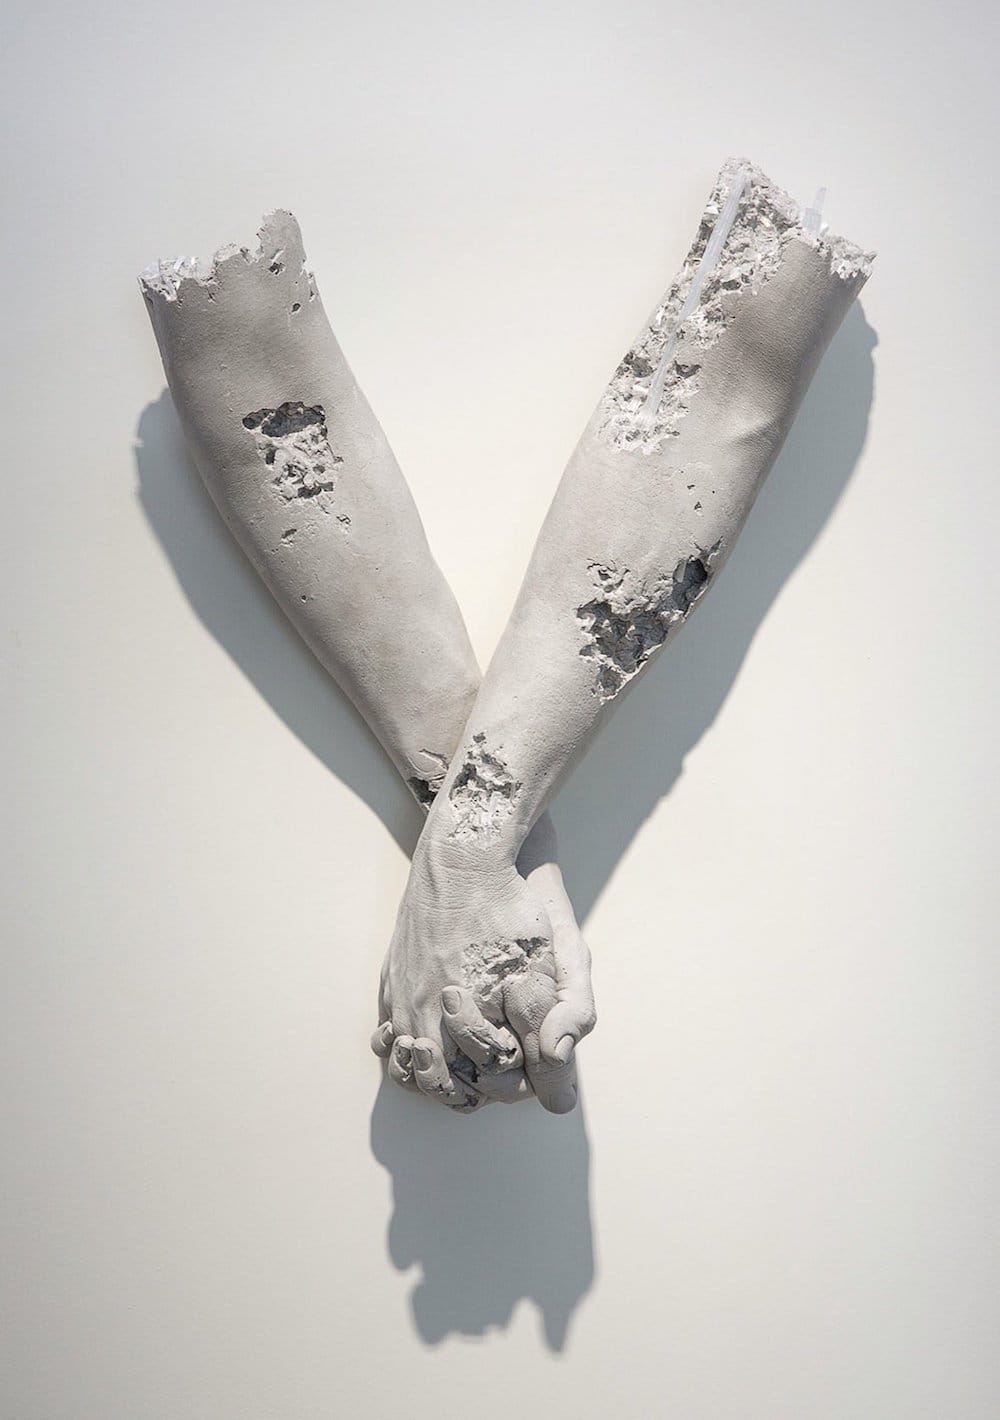 Life Size Human Figure Hydrostone Sculptures By Daniel Arsham (6)